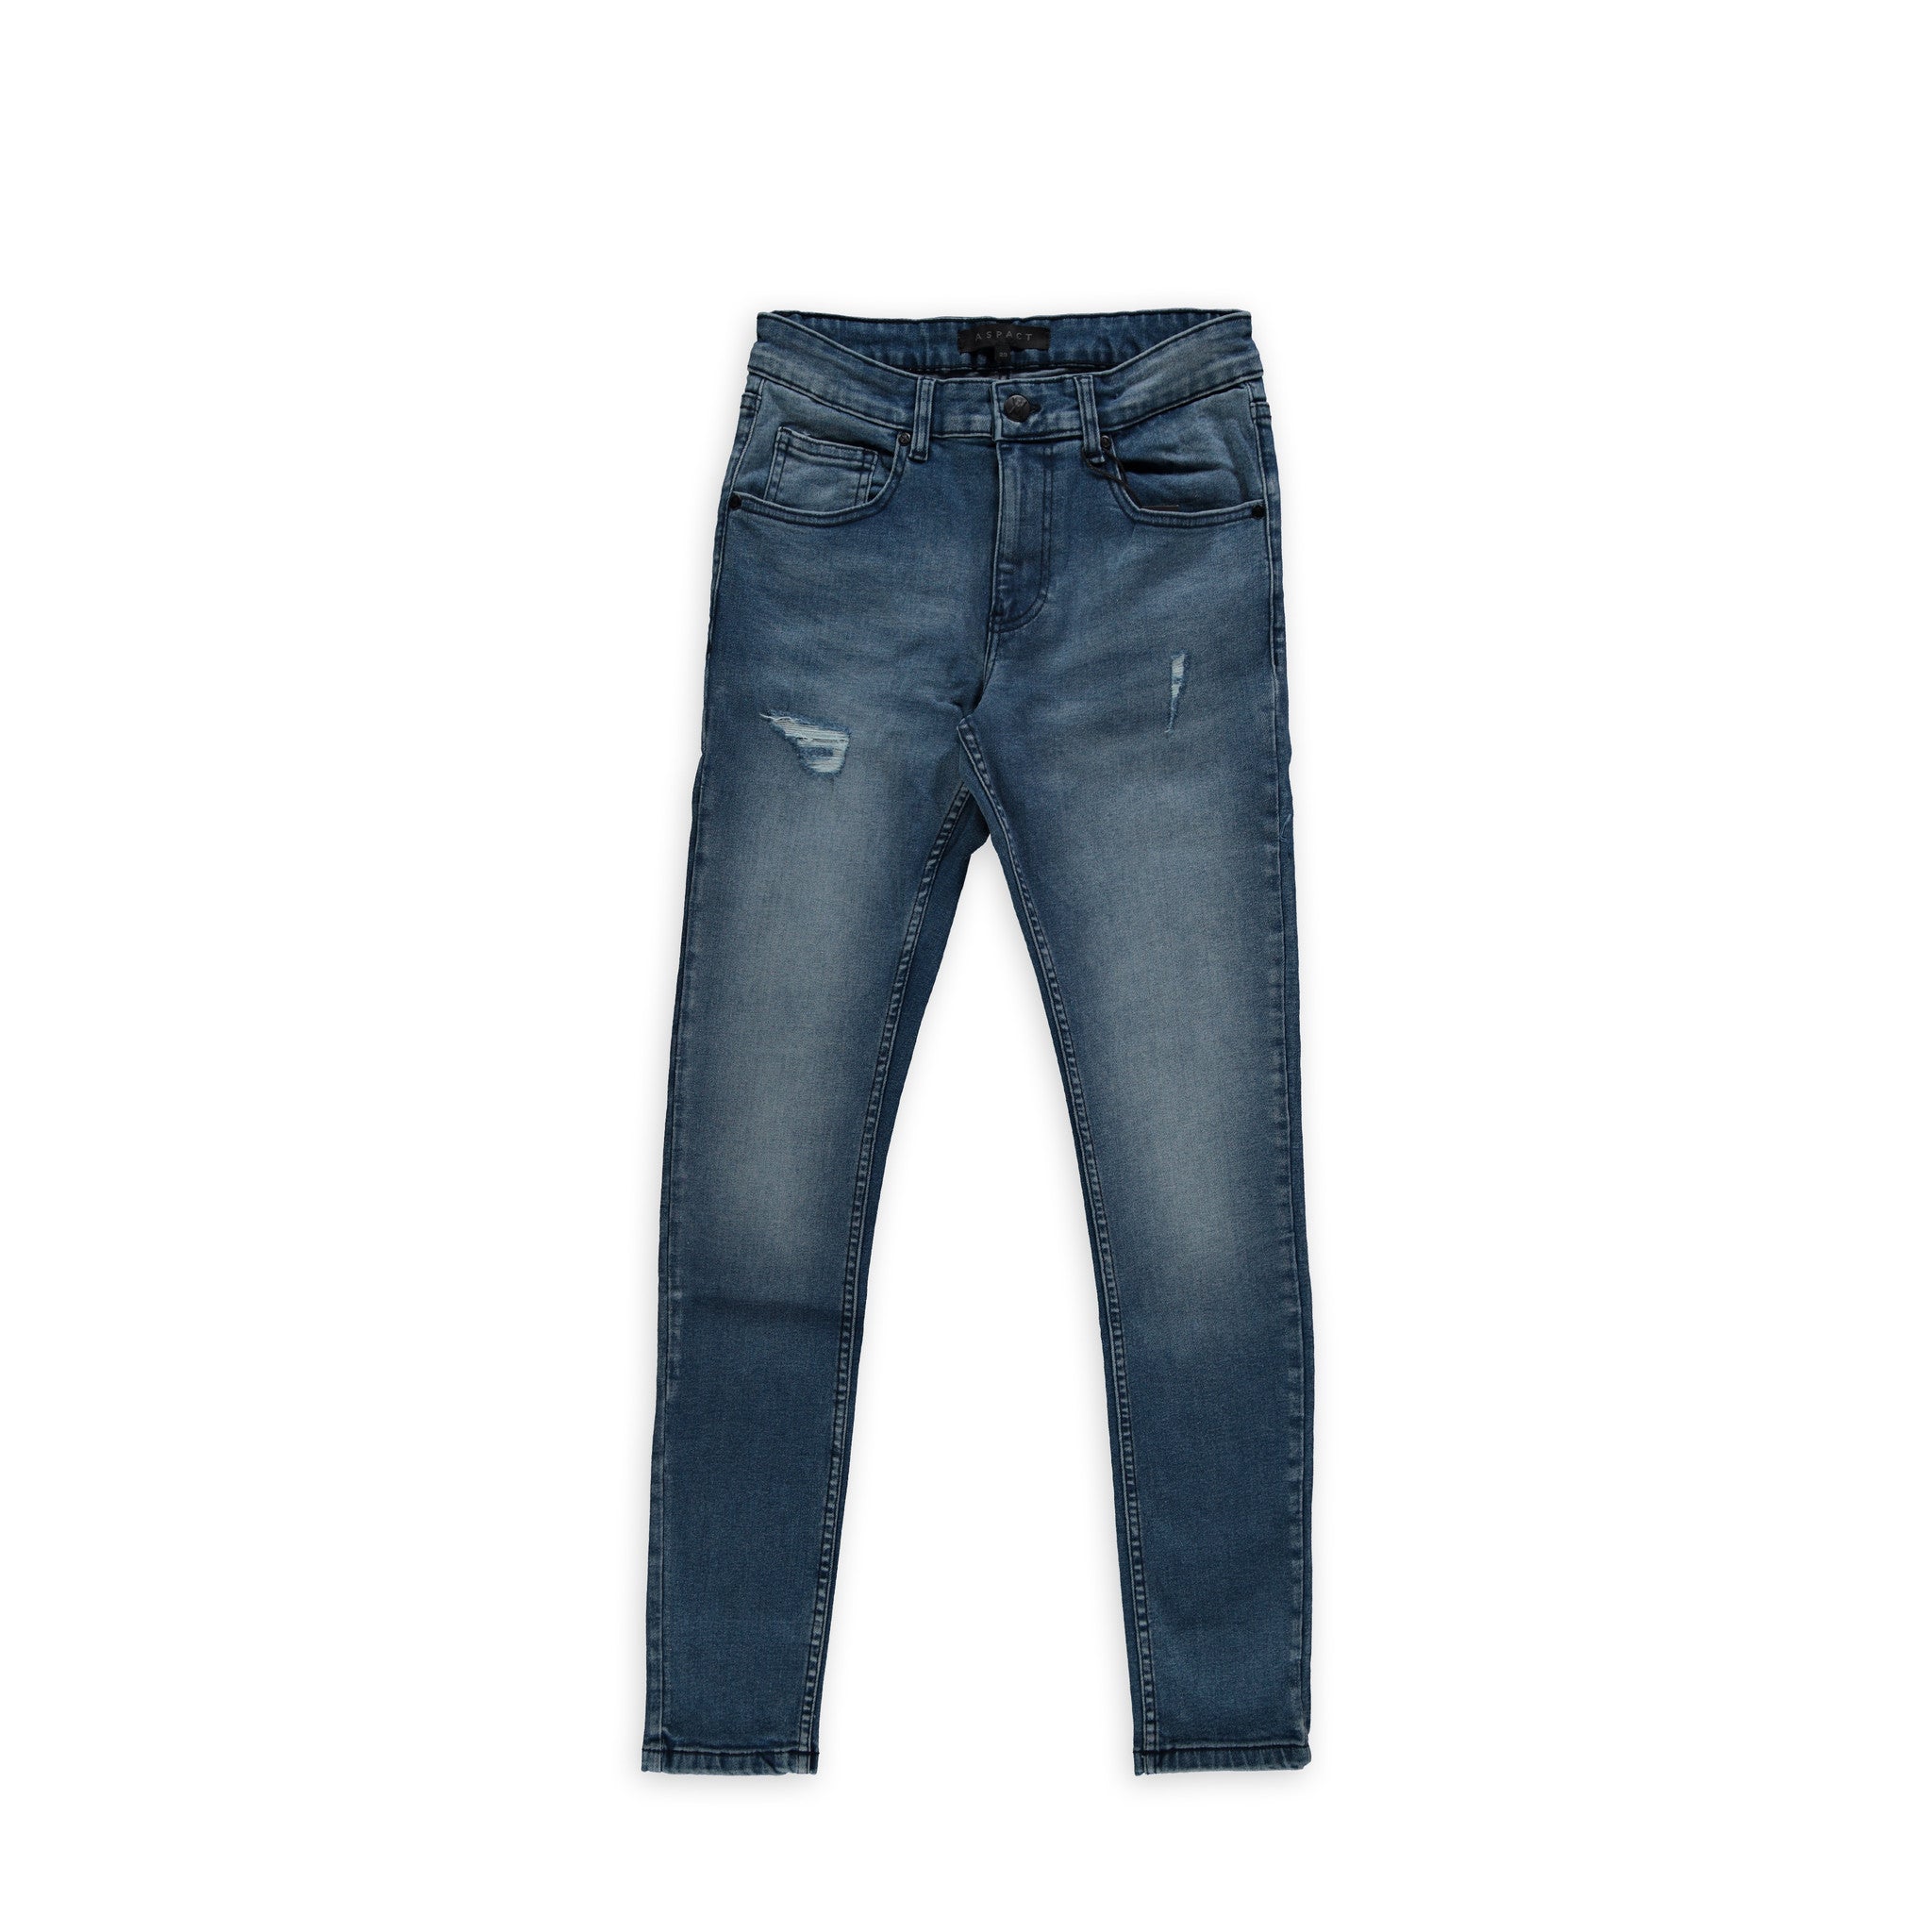 Aspact Jeans 18.0 Blauw